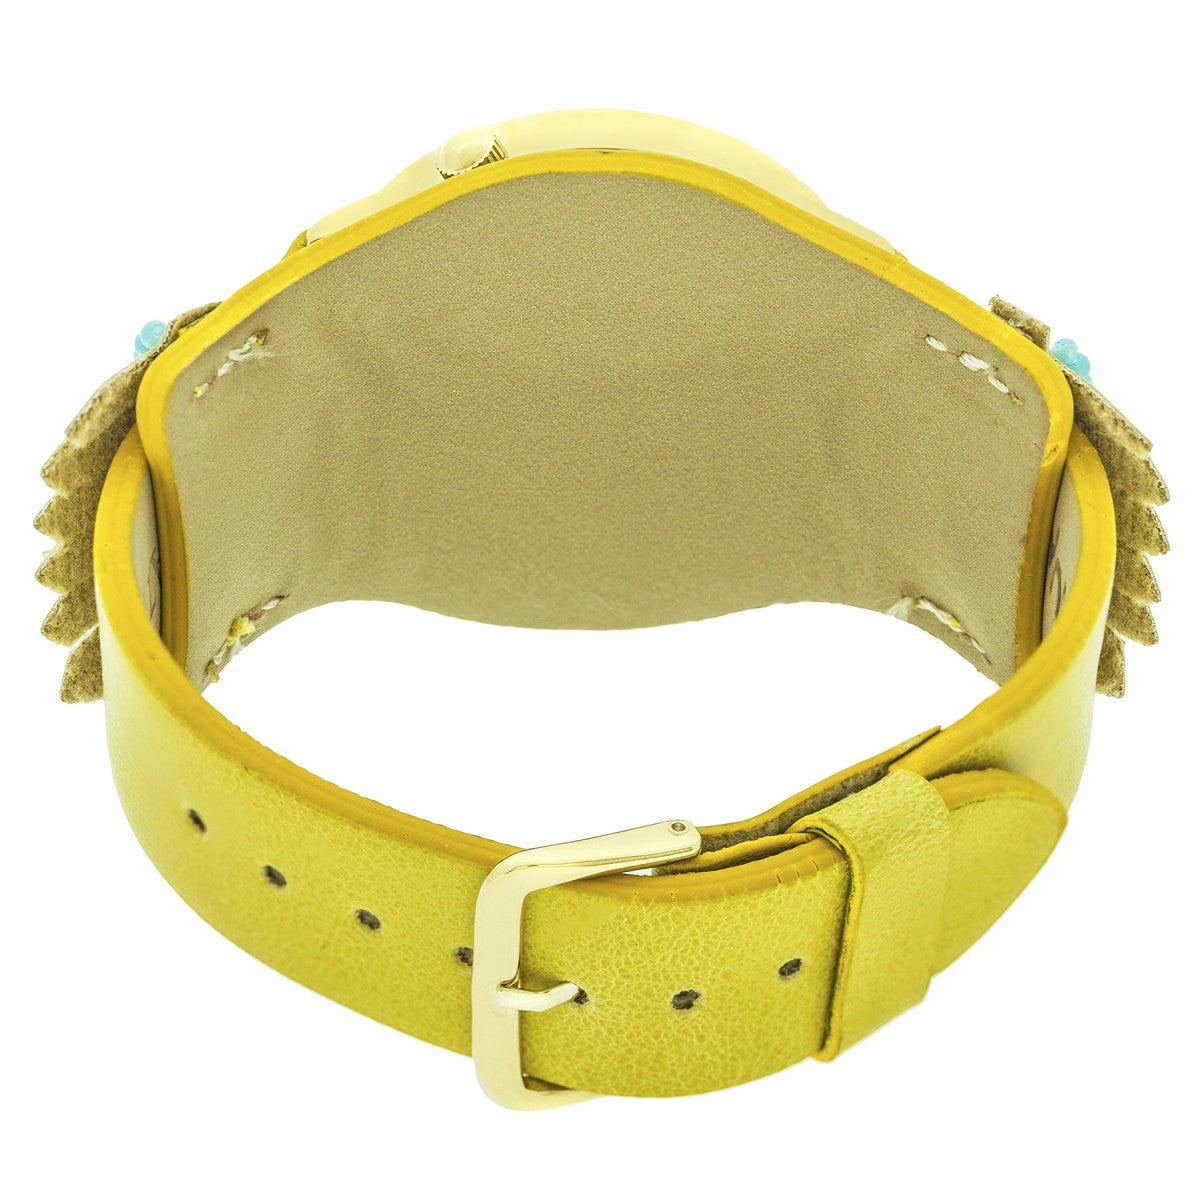 Boum Originaire Marbleizied-Dial Leather-Band Watch w/ Fringed Sheath - Gold/Goldenrod - BOUBM4002